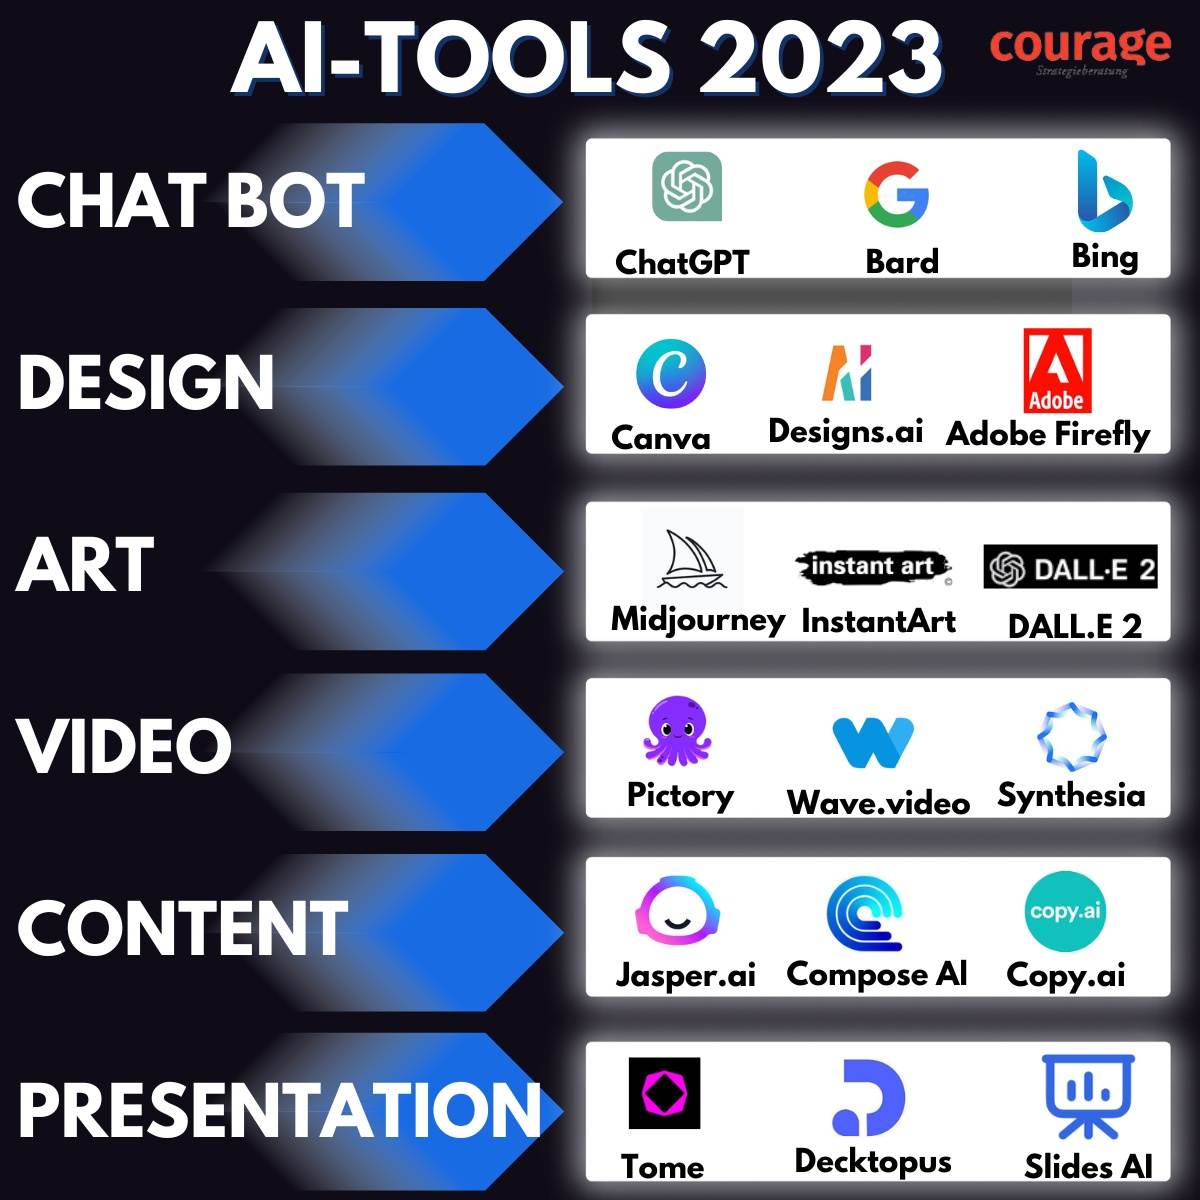 Marketing AI-tools 2023